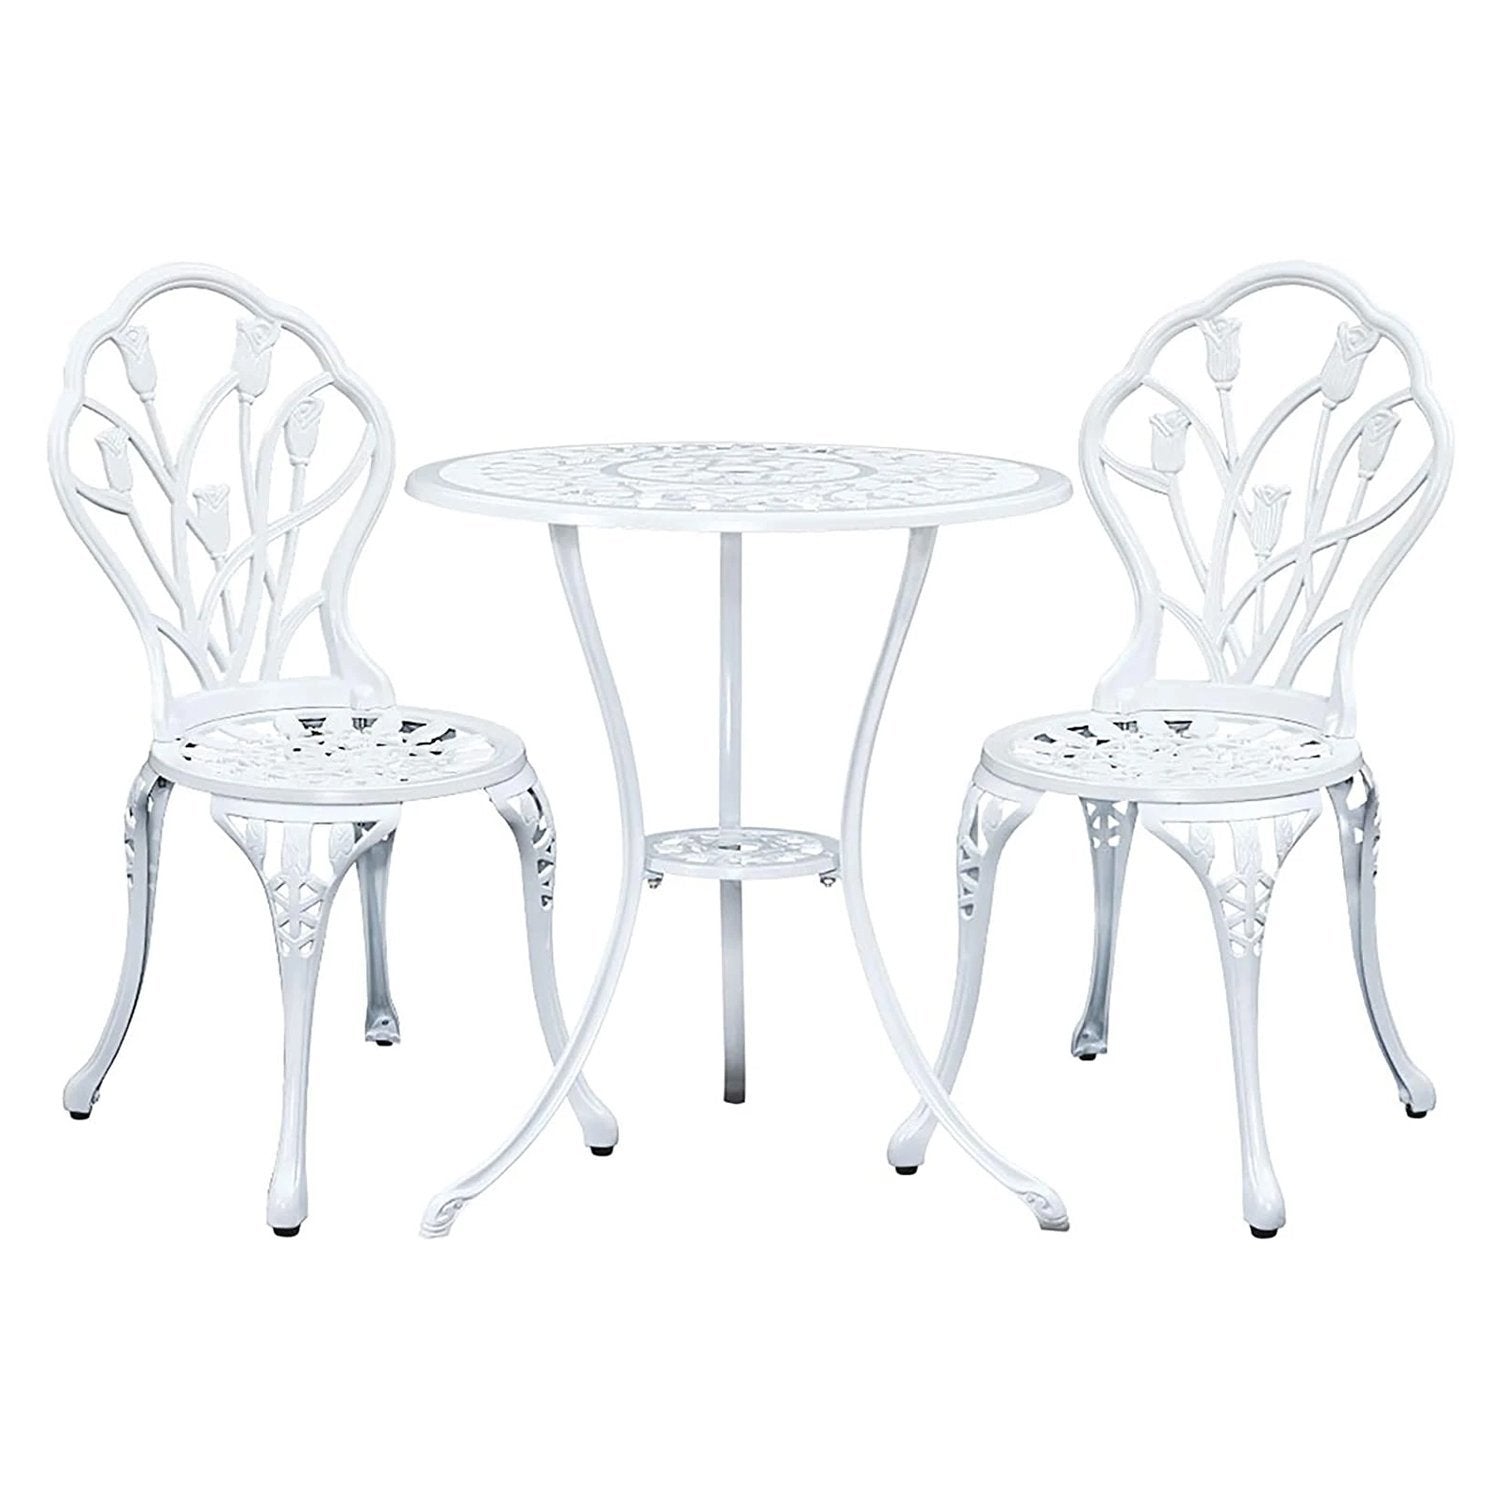 3PC Outdoor Aluminium Bistro Table Chairs Garden Patio - White